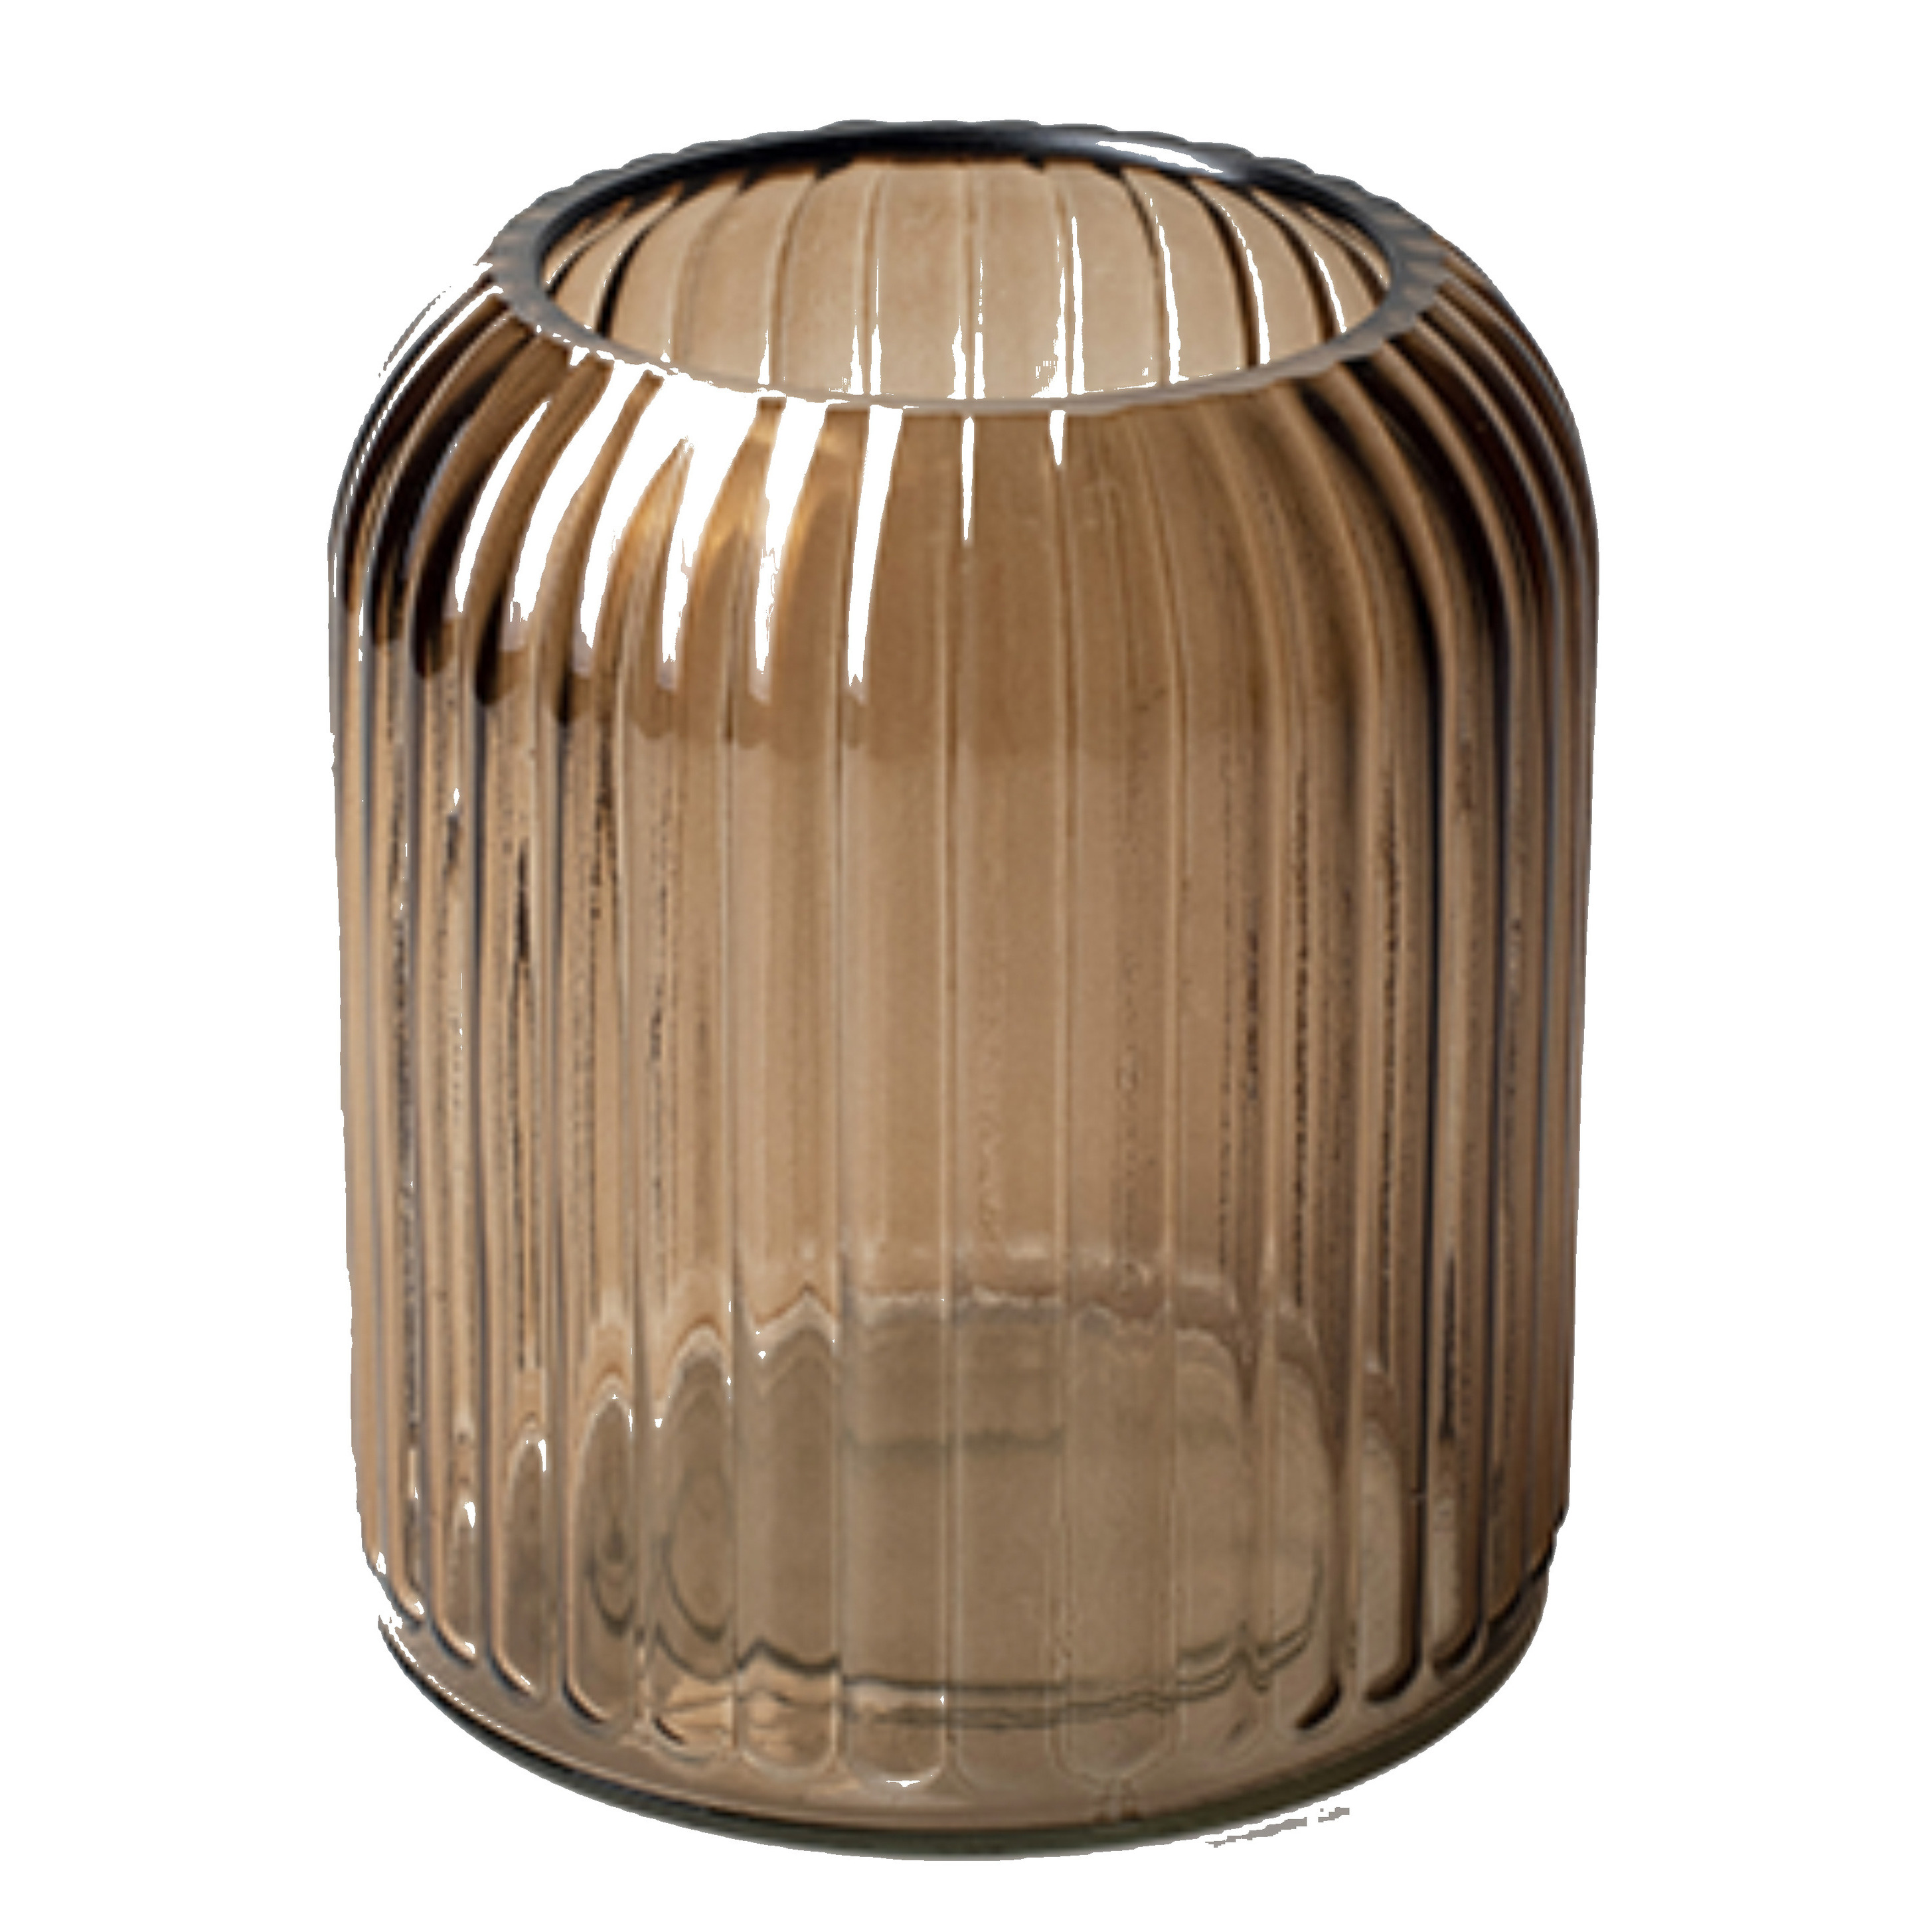 Jodeco Bloemenvaas - striped lichtbruin/transparant glas - H13 x D11cm -